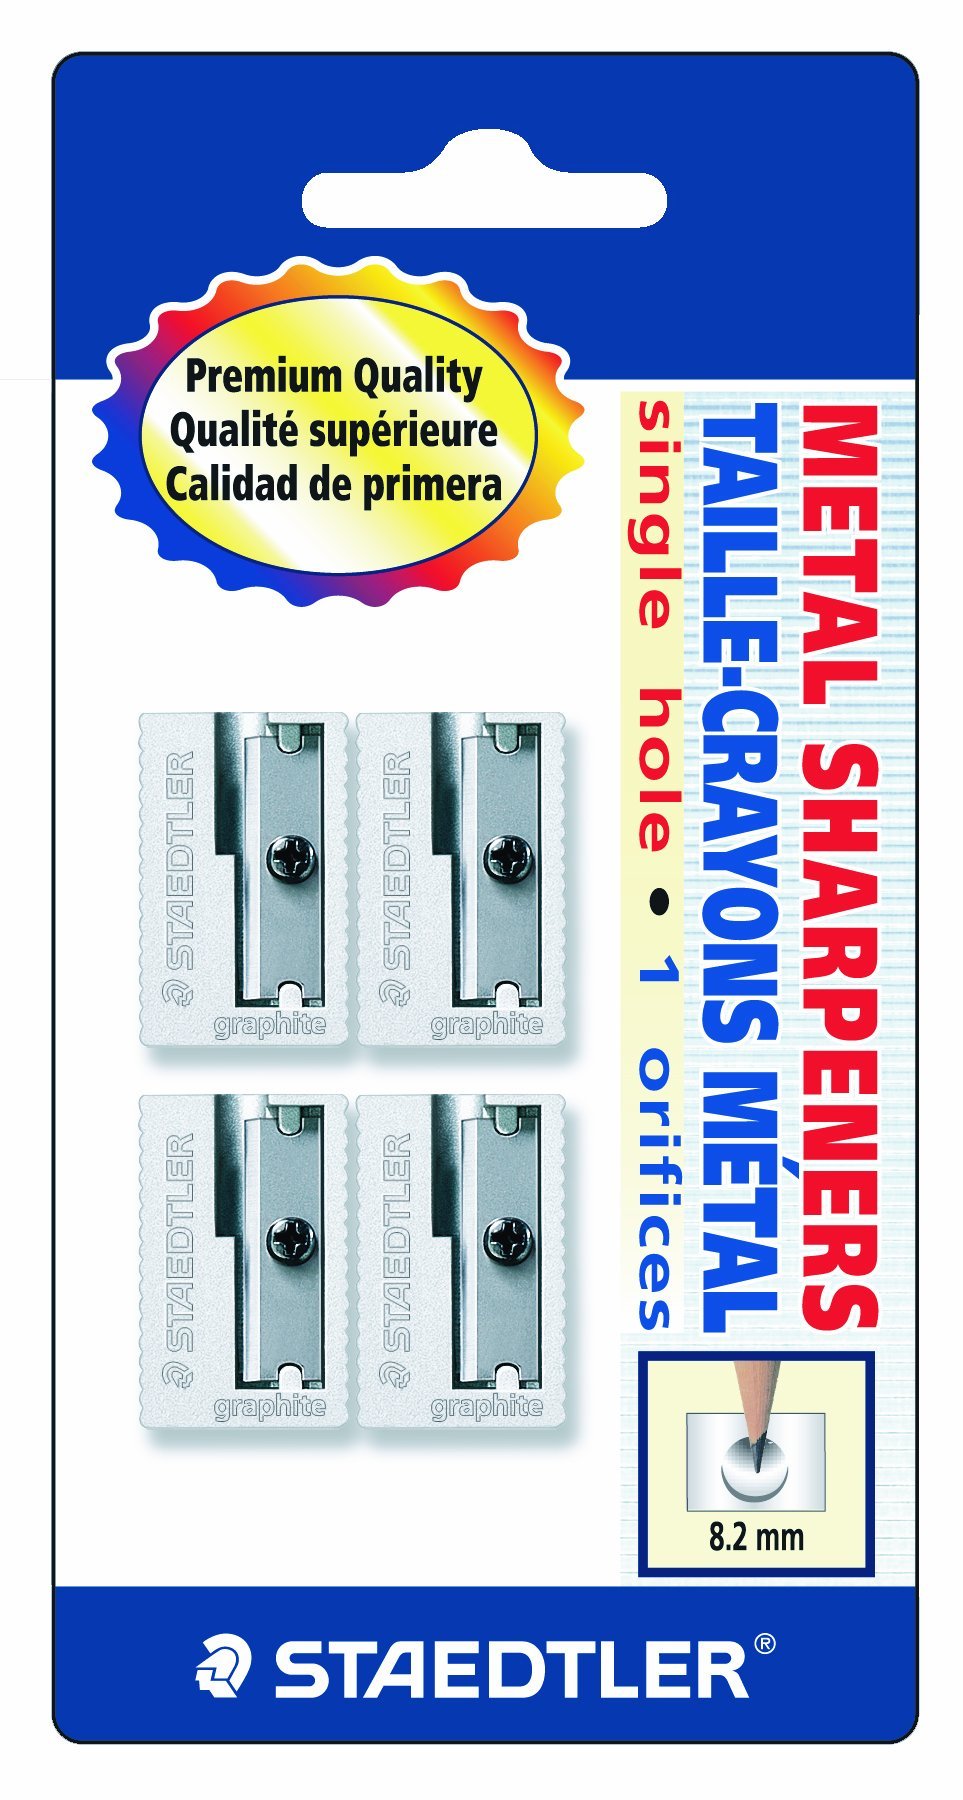 Staedtler Handheld Pencil Sharpeners, Graphite, 4 pieces (510 10 BK4),Silver 1 Silver